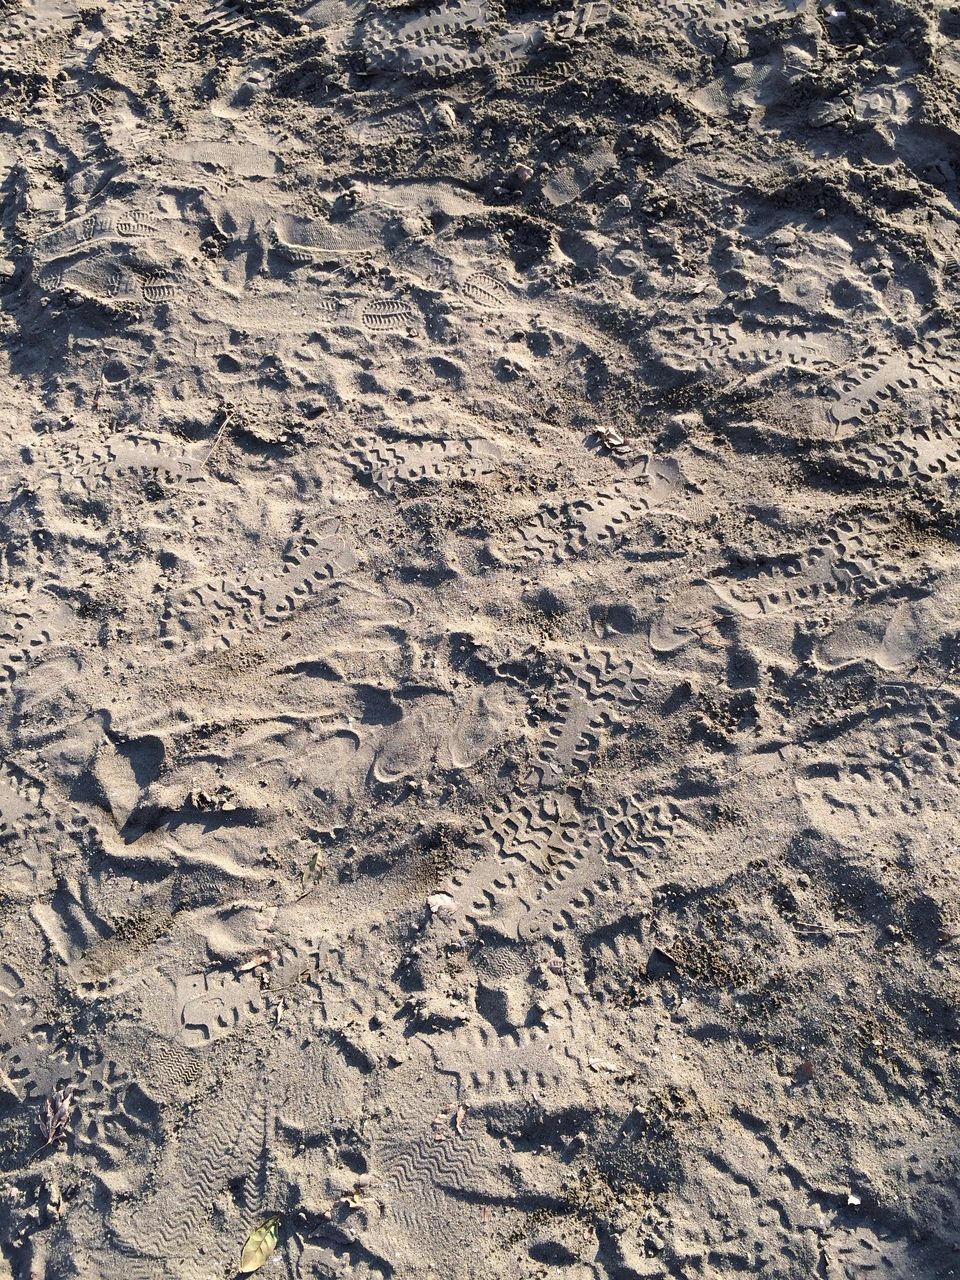 Shoe prints on sand